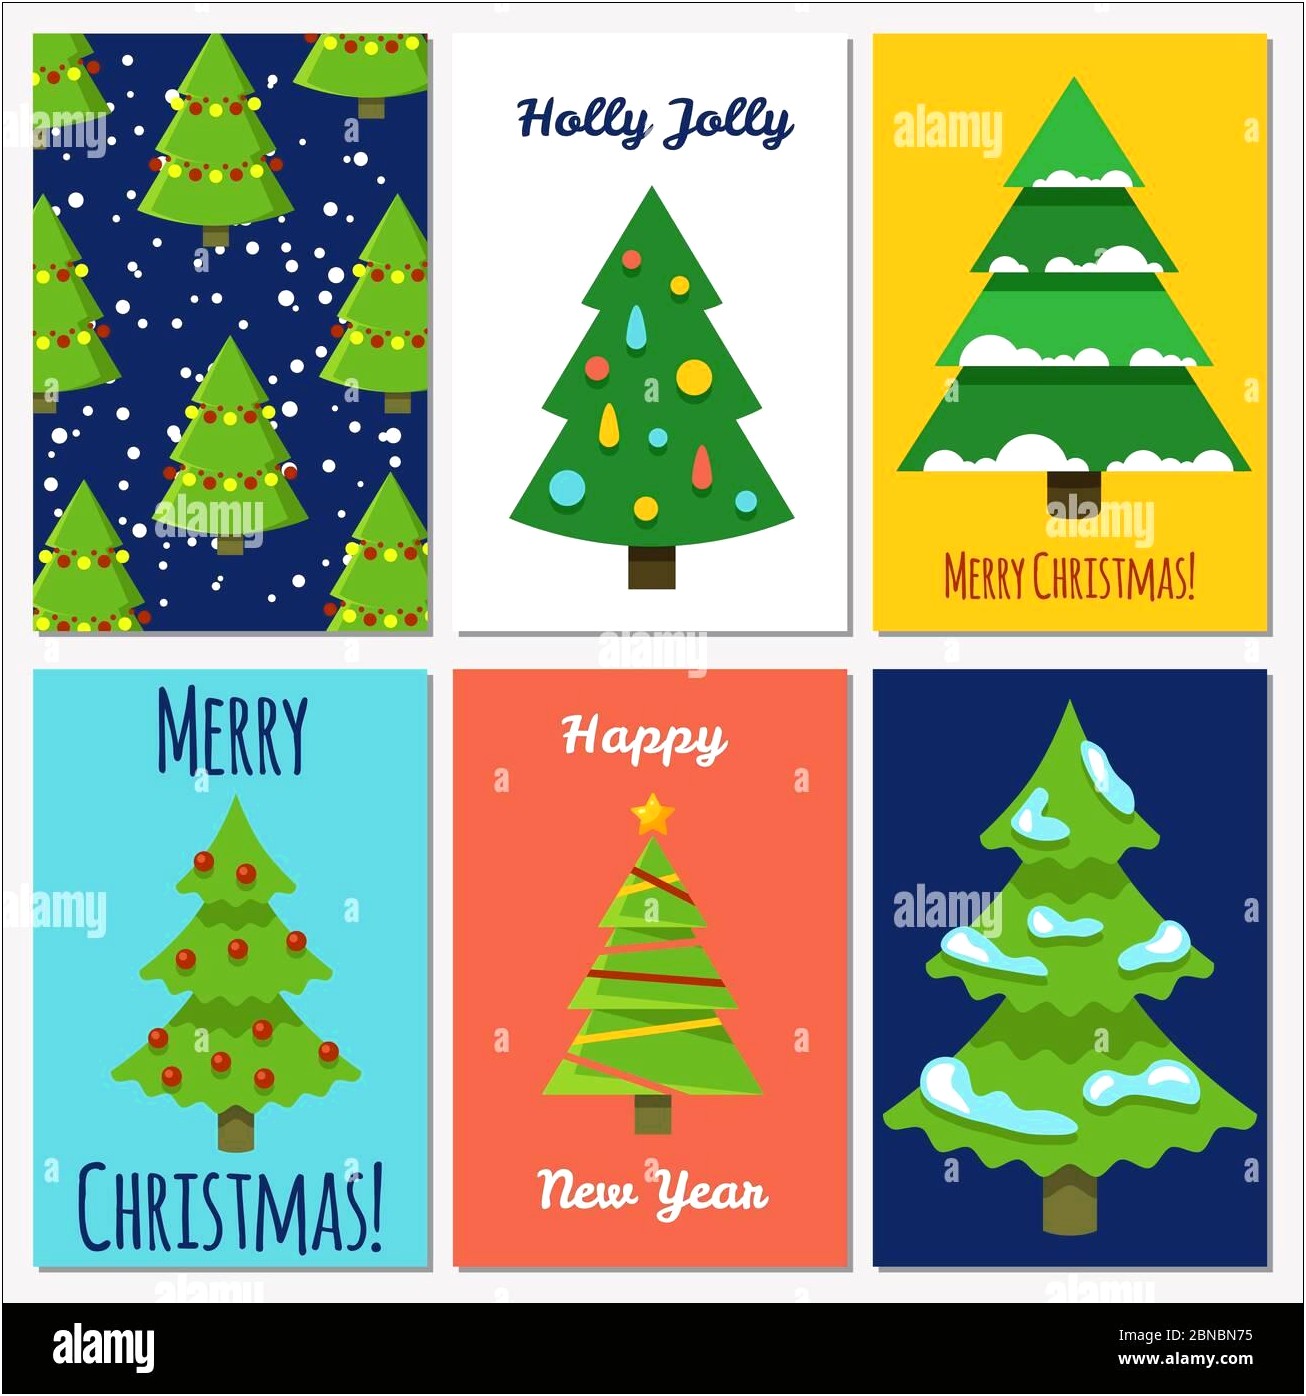 Free Preschool Template For Christmas Tree